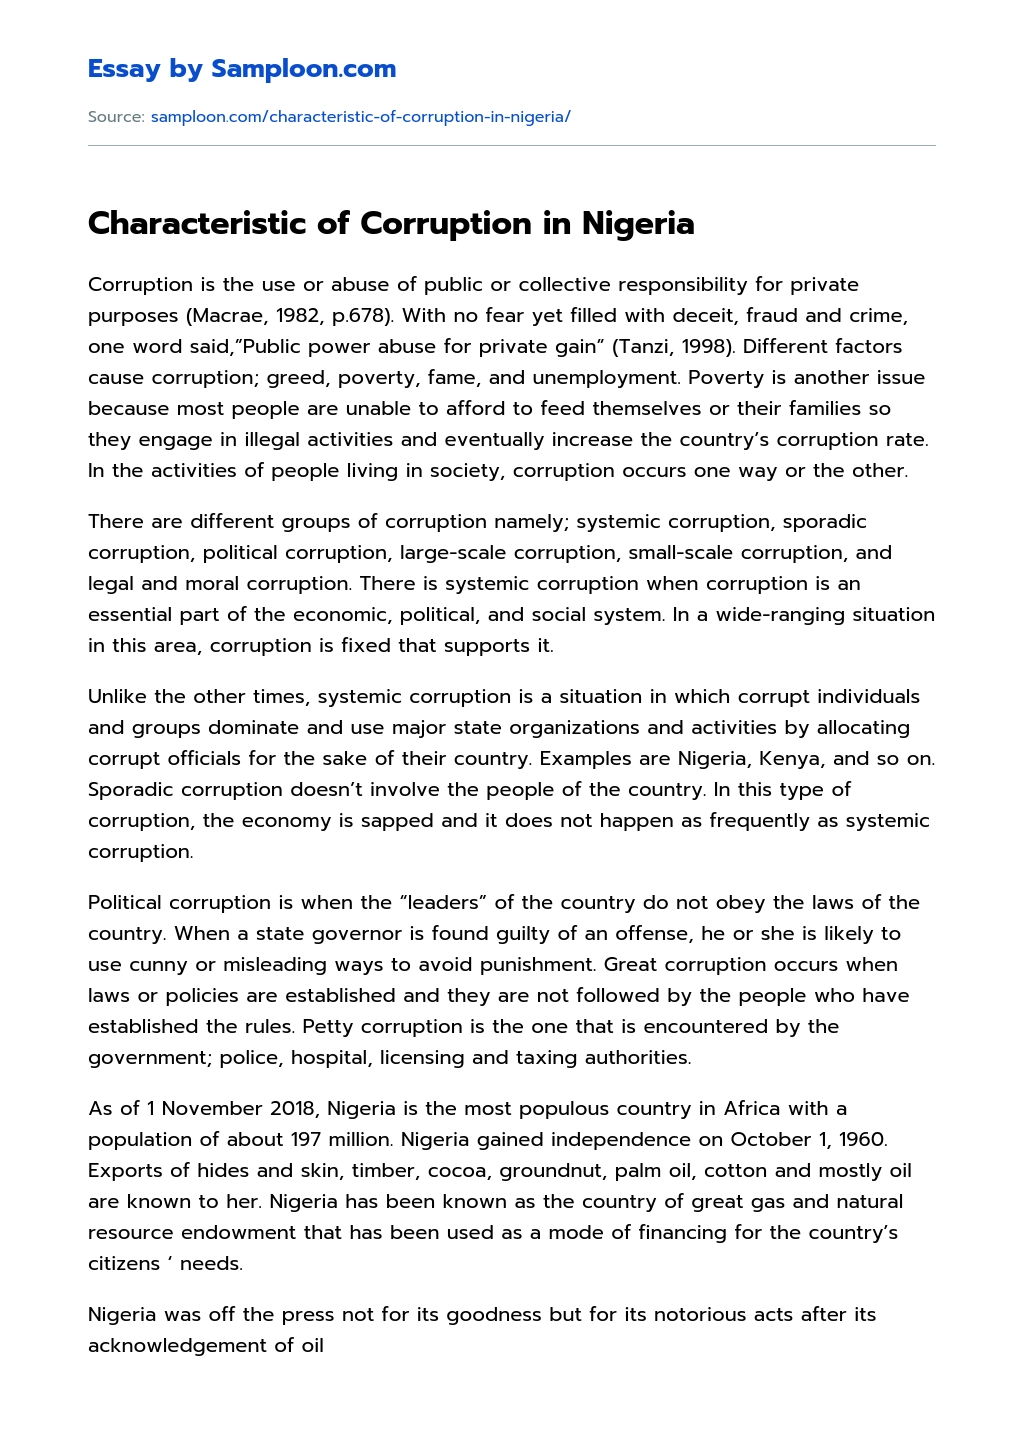 Characteristic of Corruption in Nigeria essay